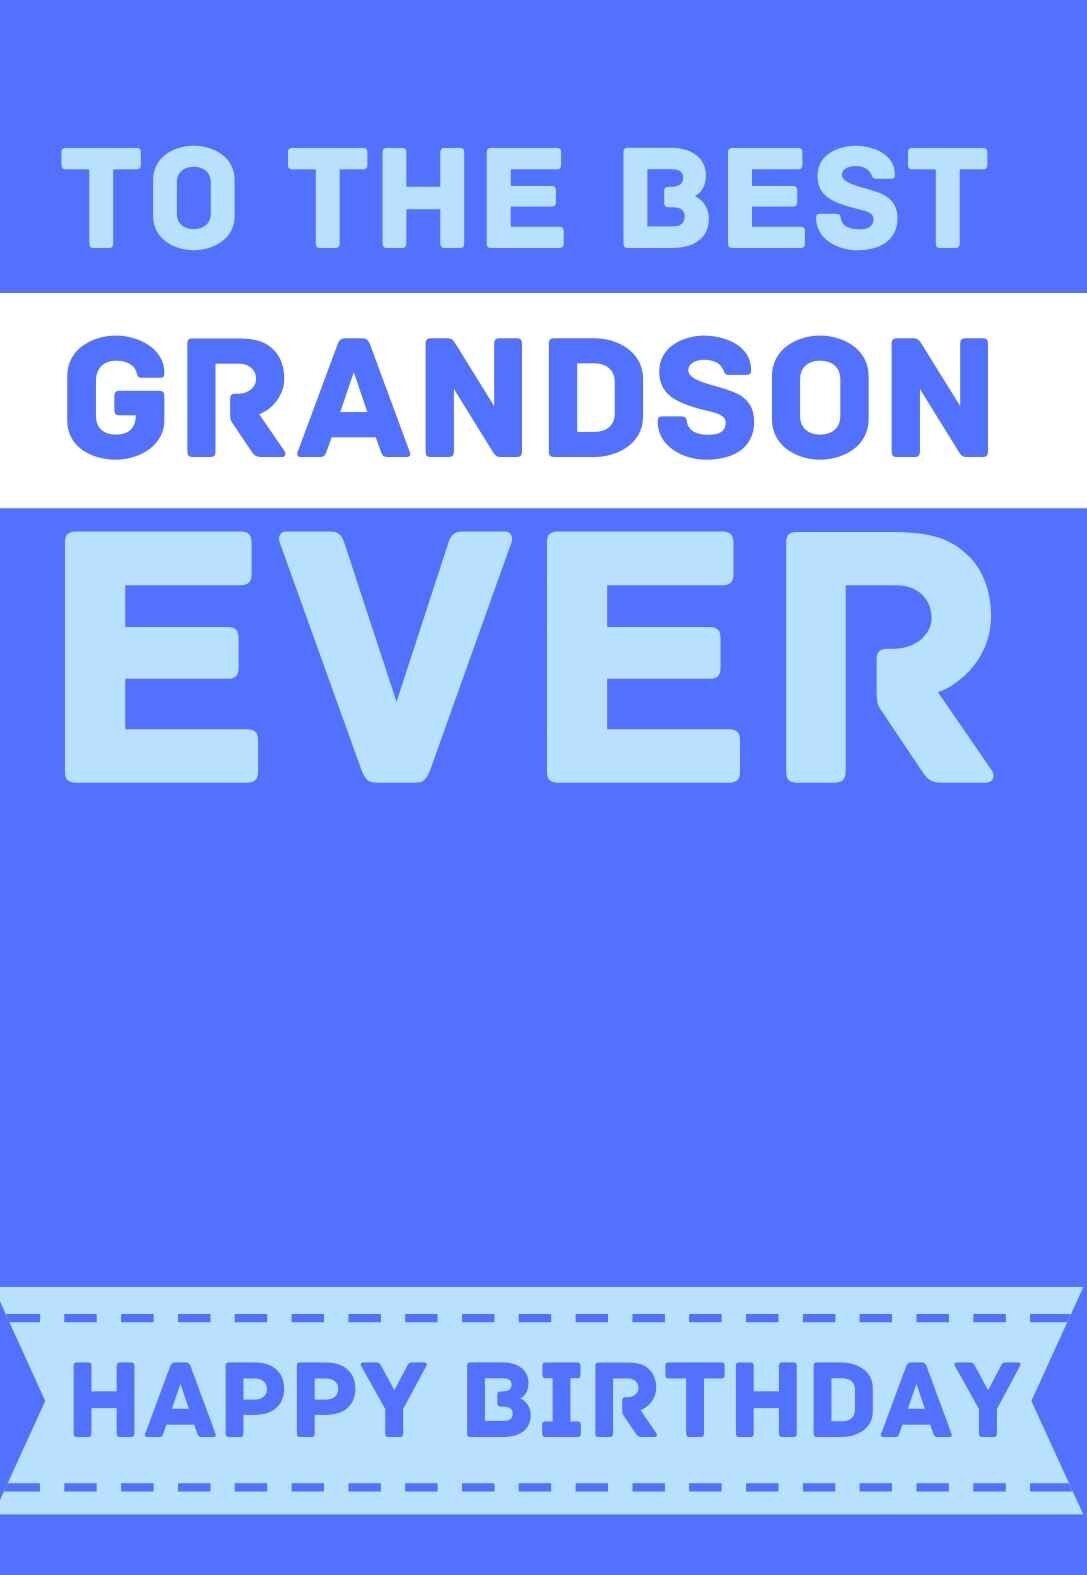 Printable Birthday Cards for a Grandson — PRINTBIRTHDAY.CARDS